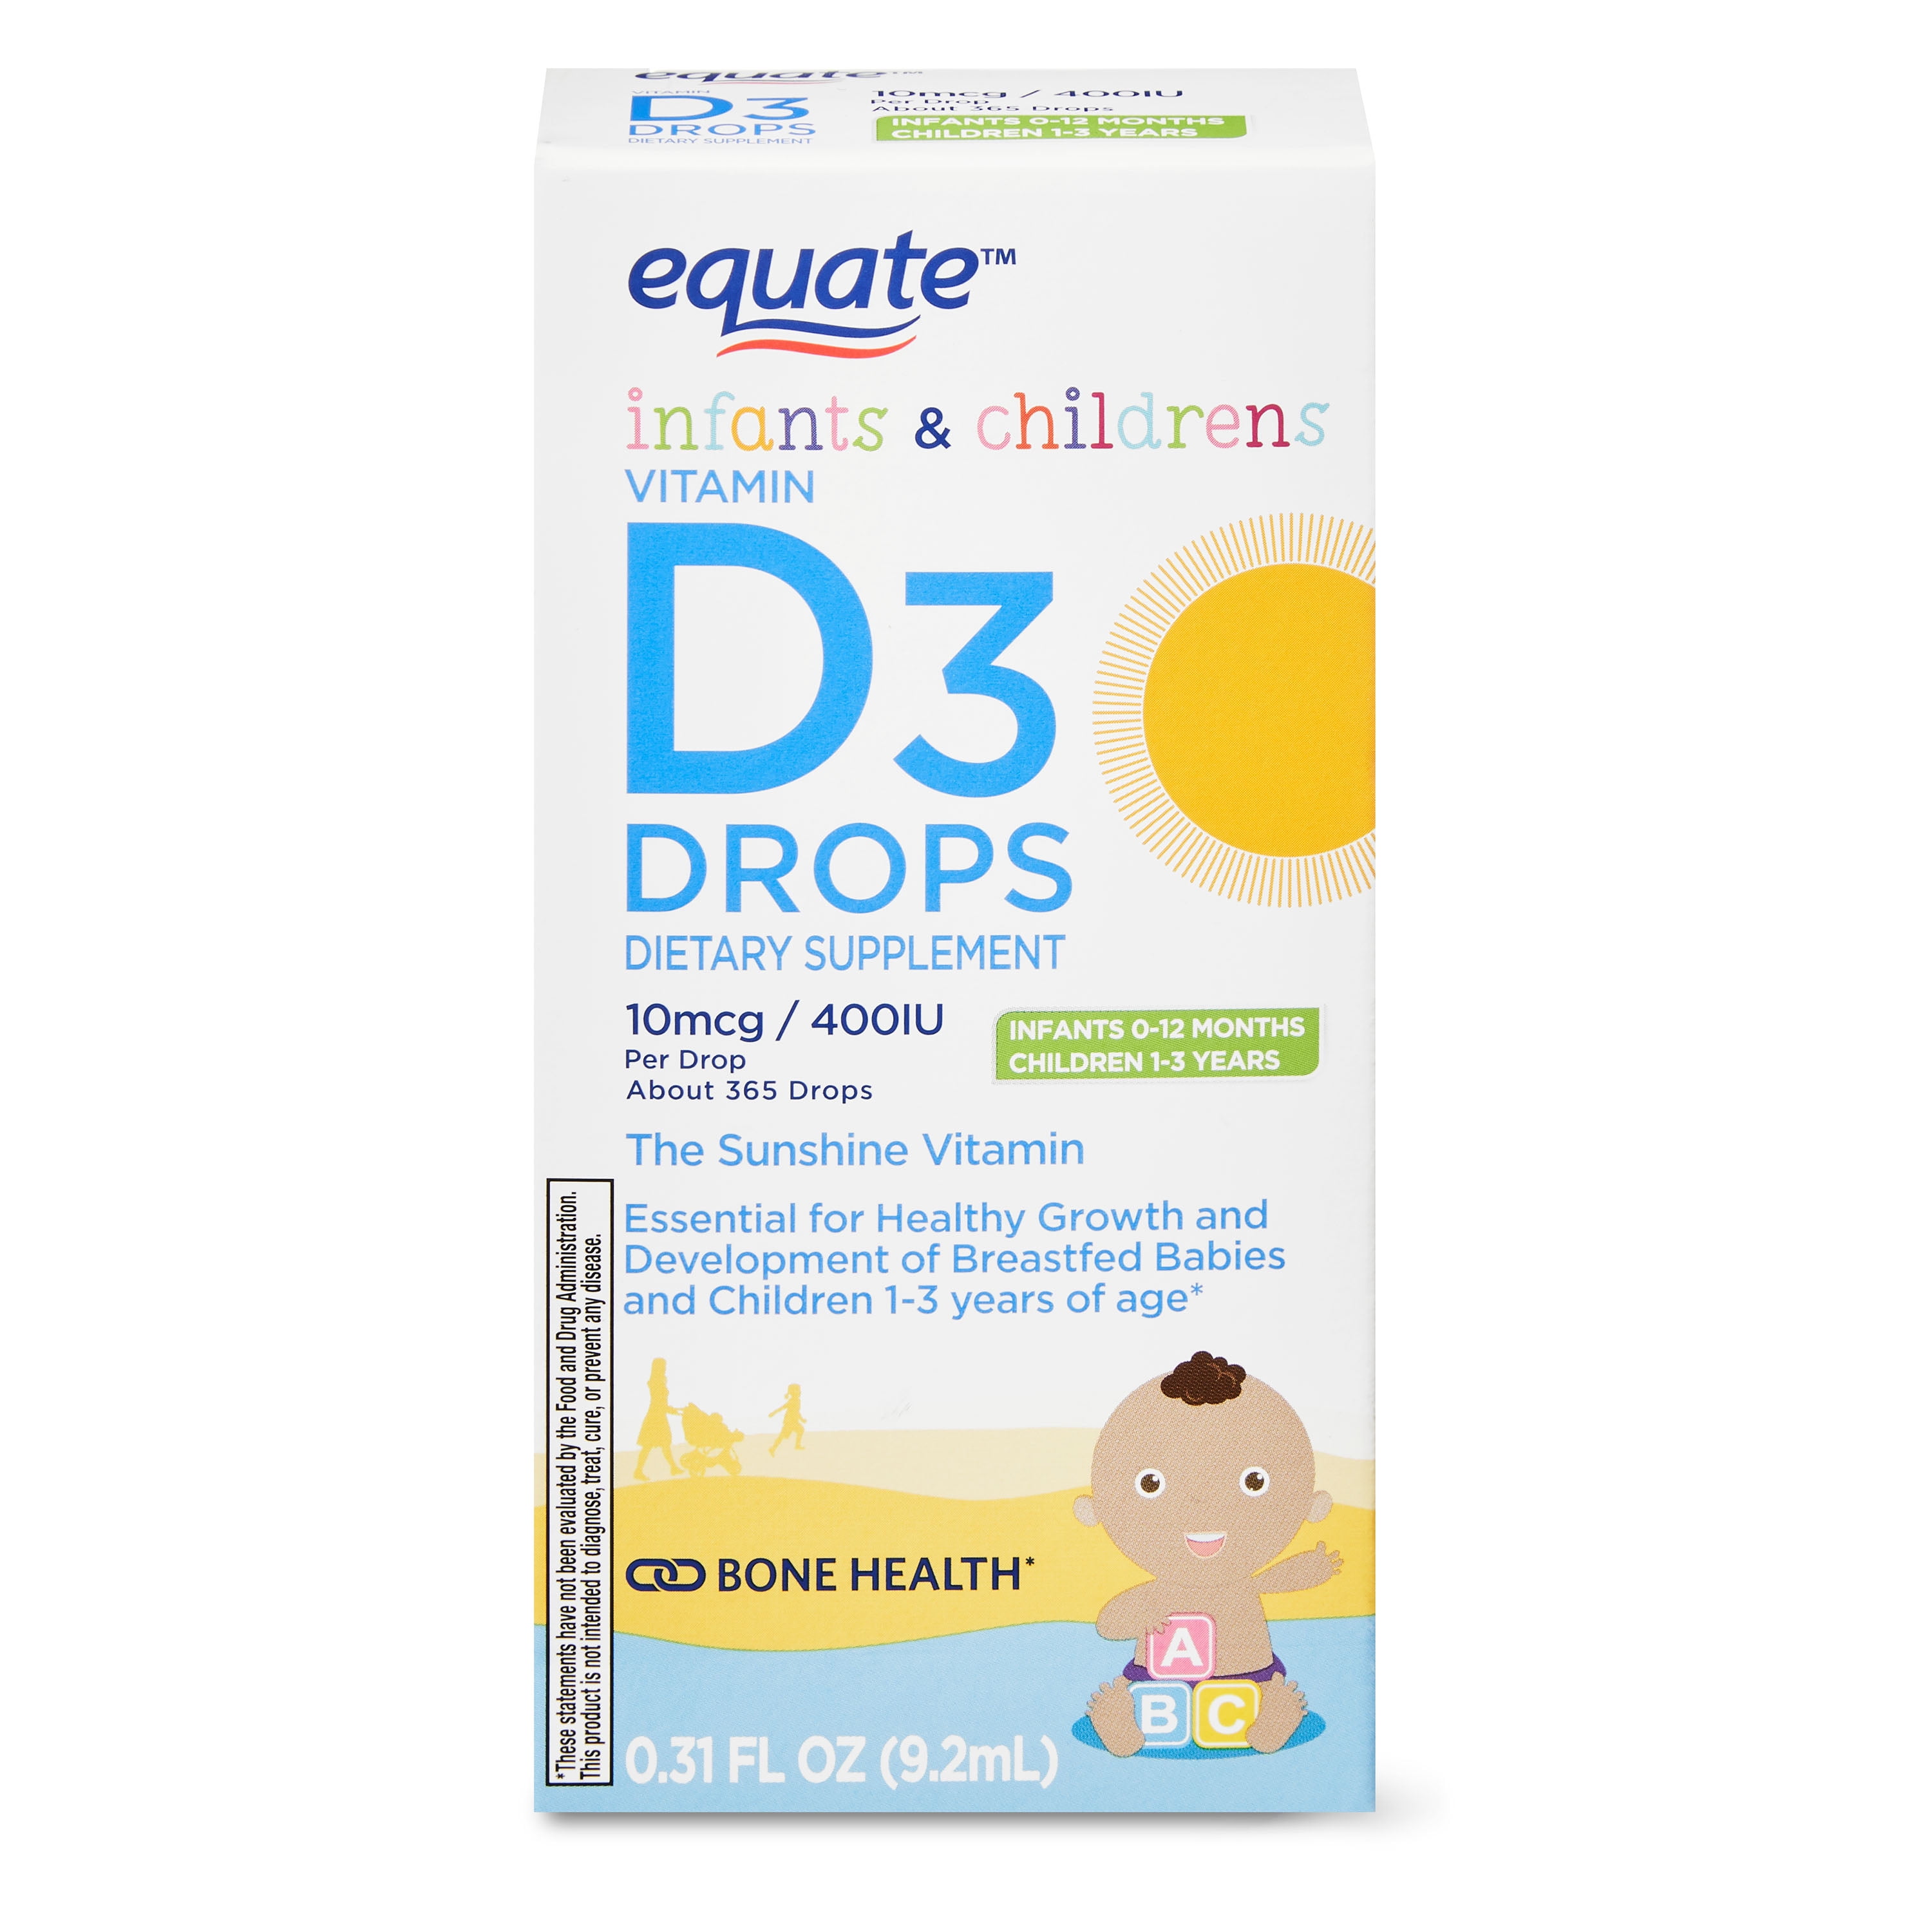 Kostuum patrouille Gewoon doen Equate Infant/childrens Vitamin D3 Drops - Walmart.com